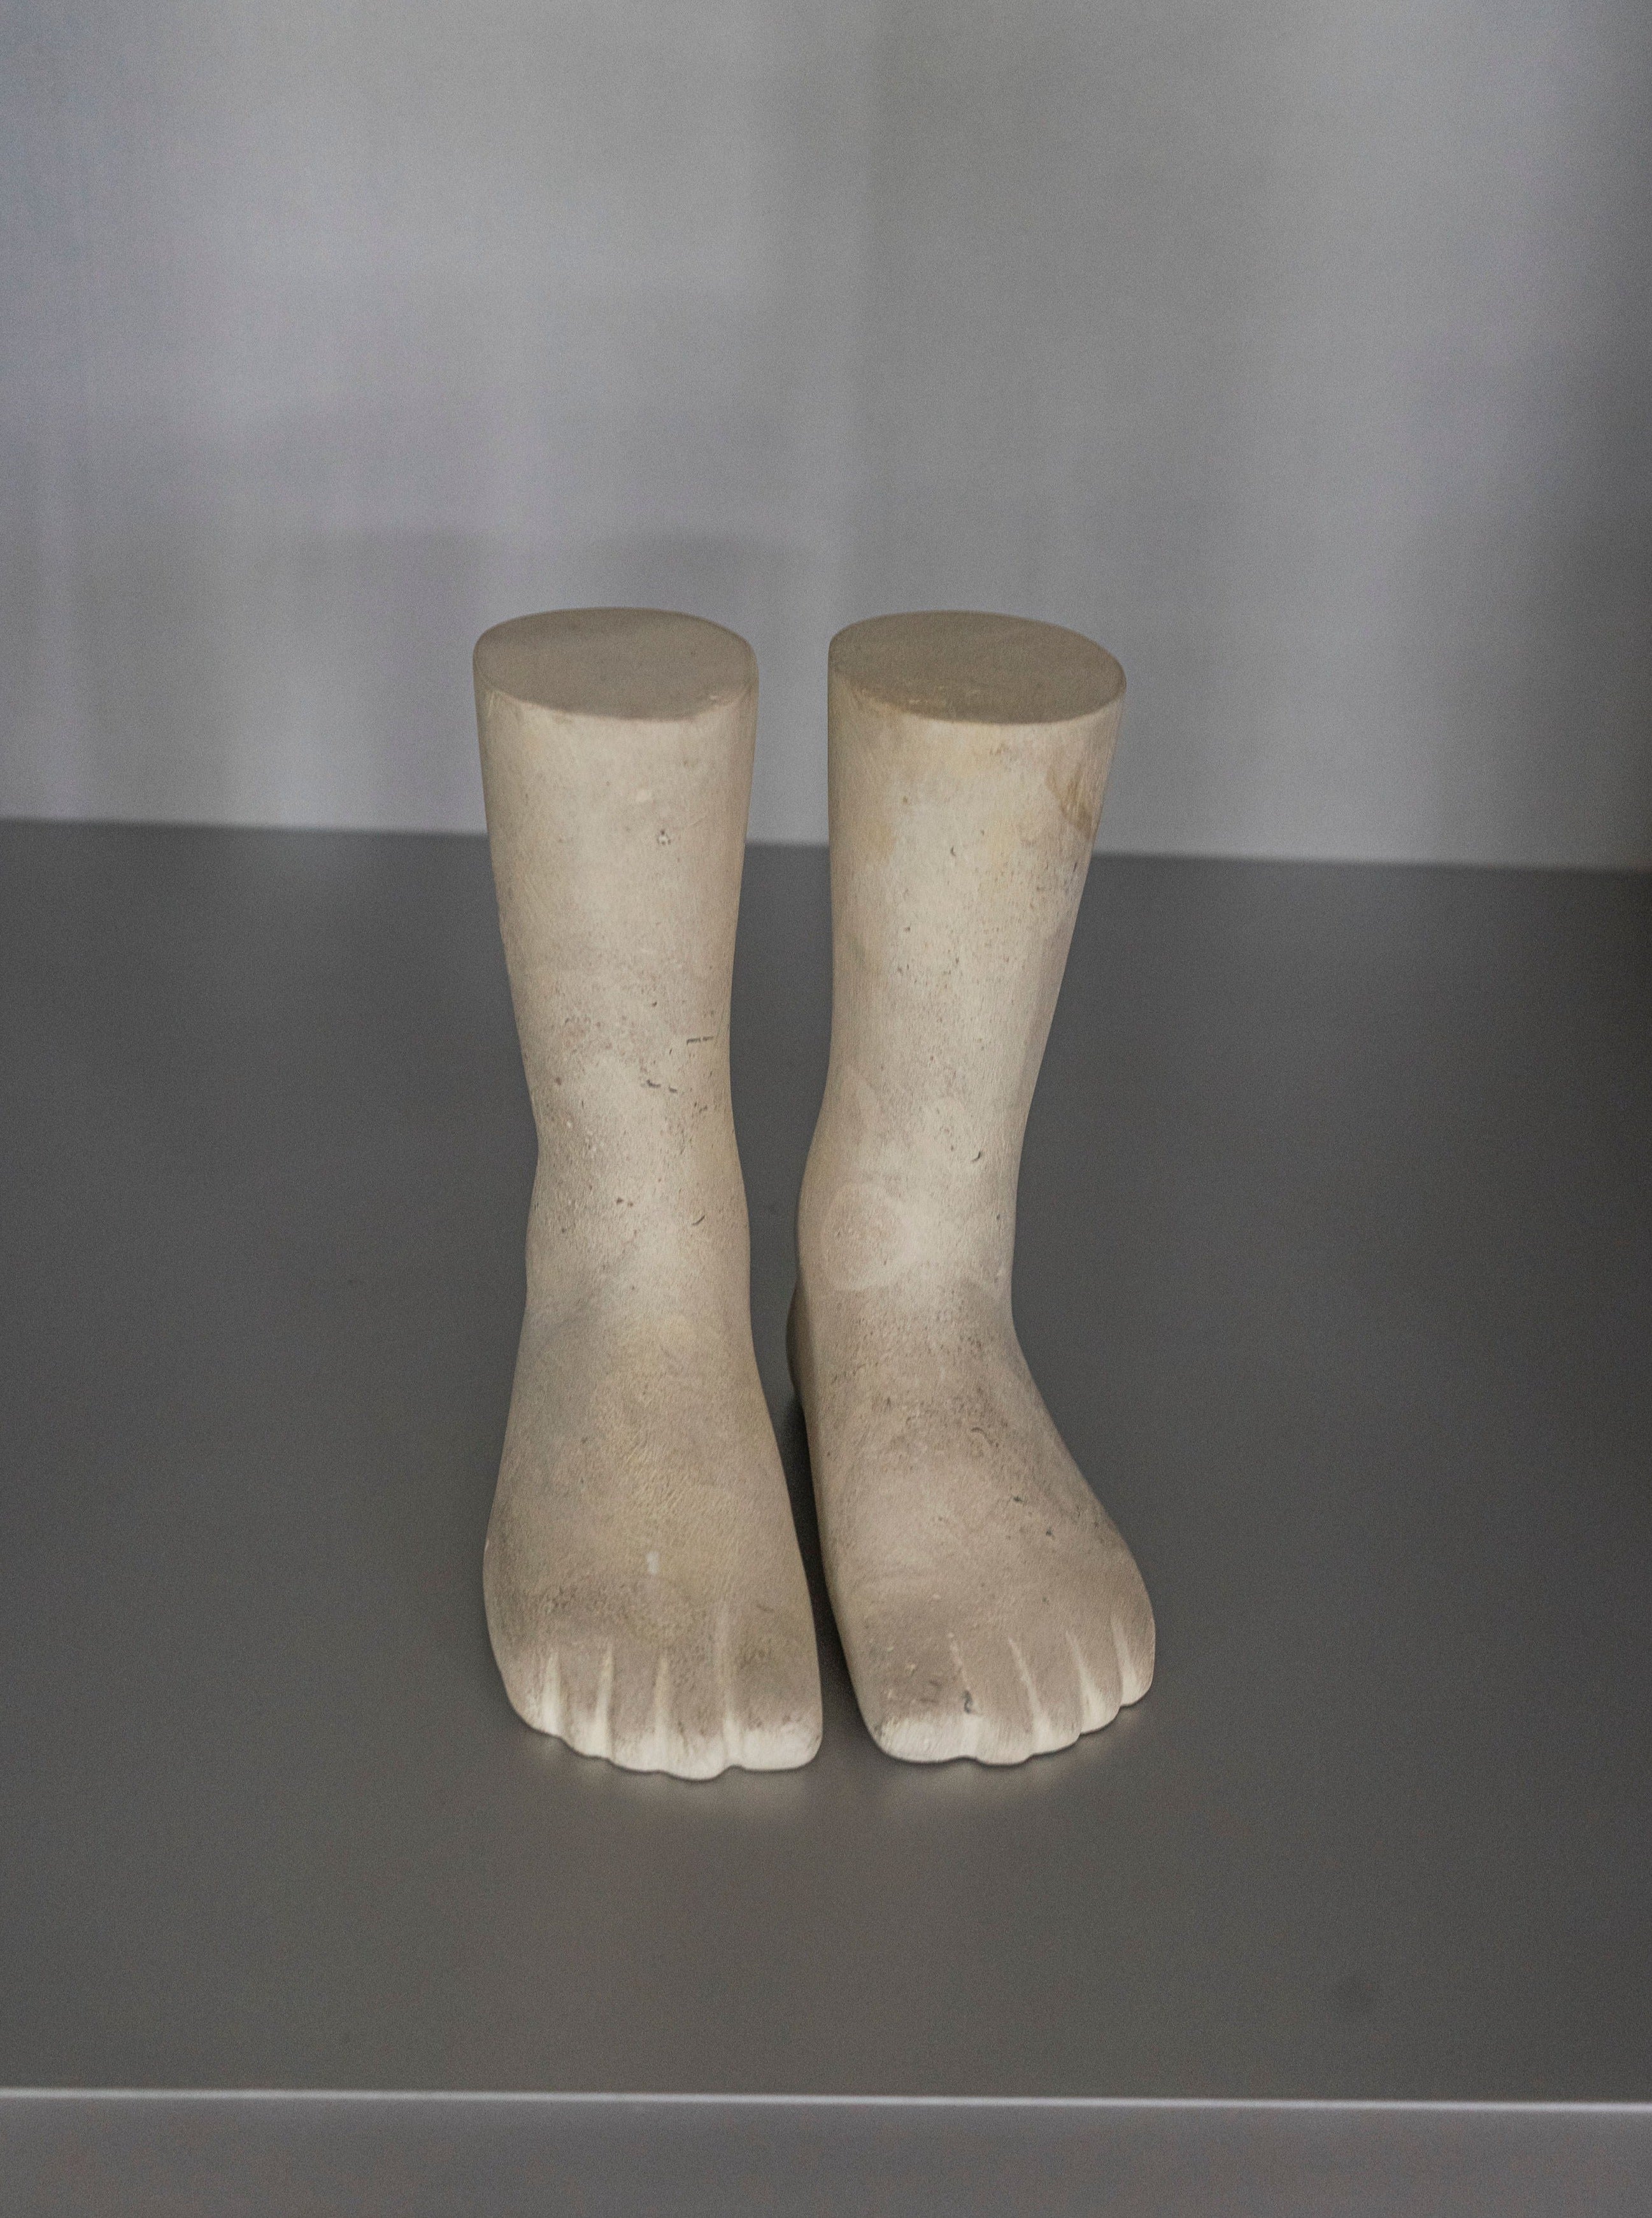 Stone Feet Sculpture